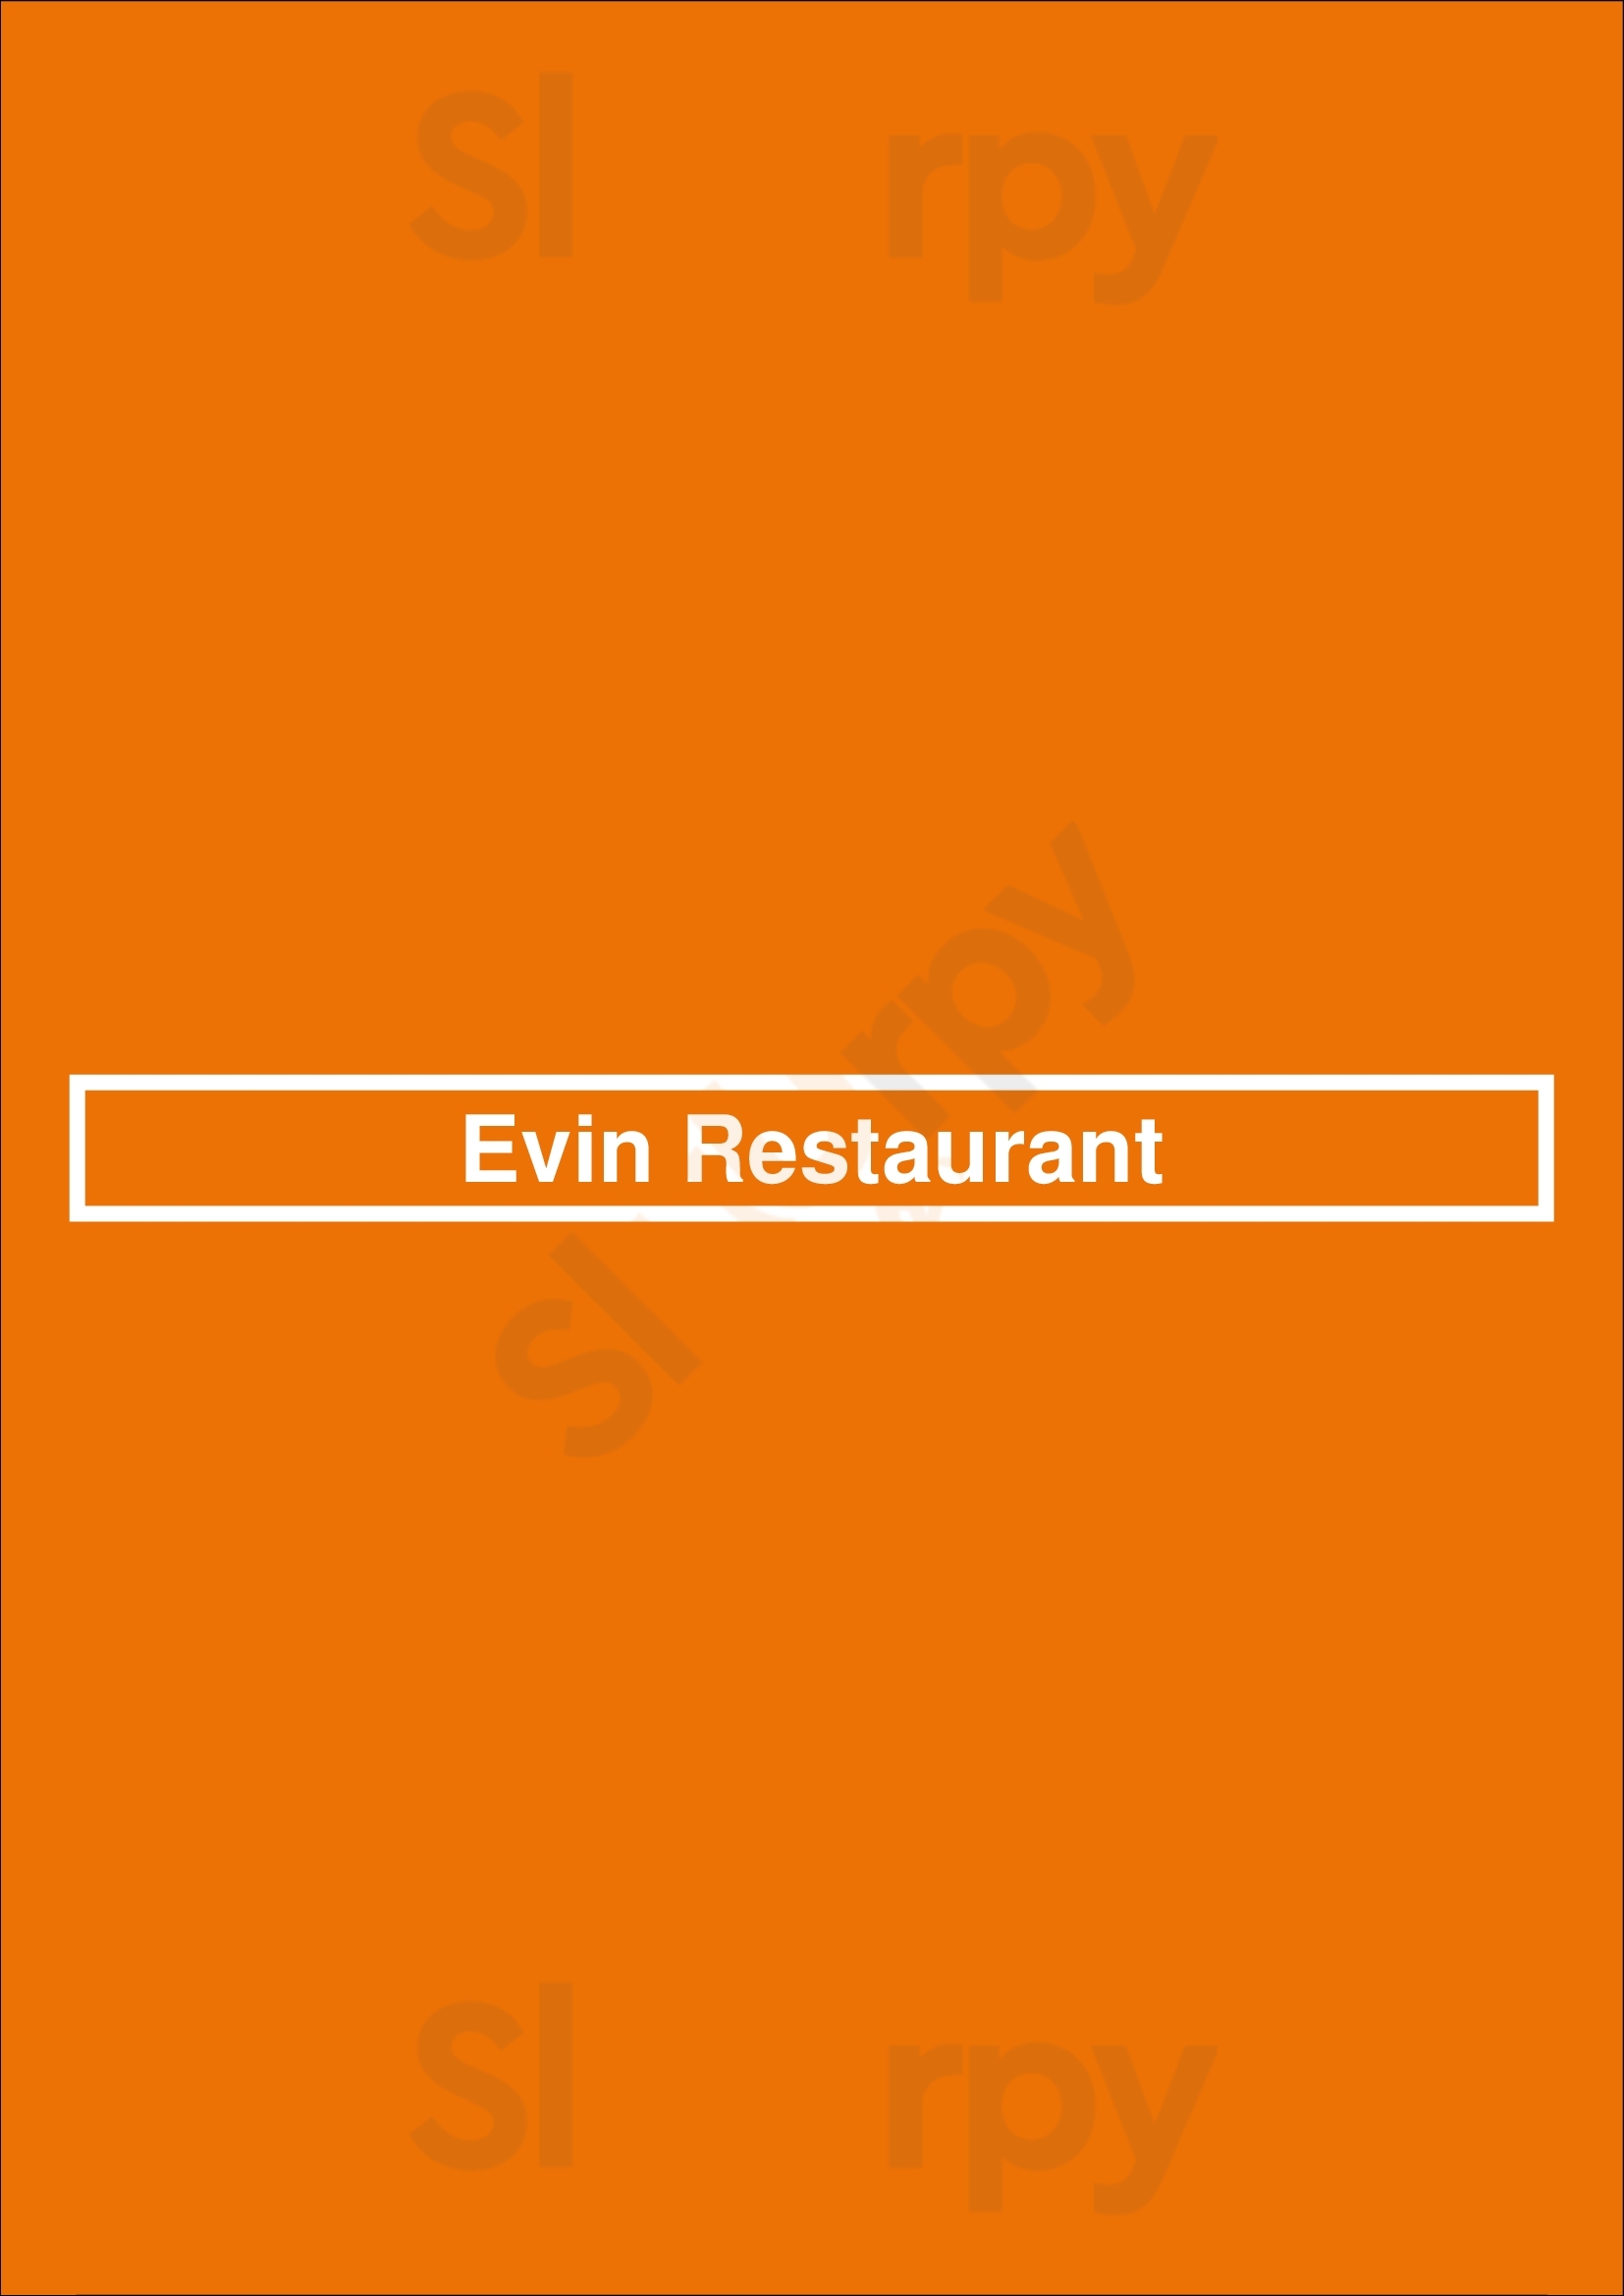 Evin Restaurant Rotterdam Menu - 1